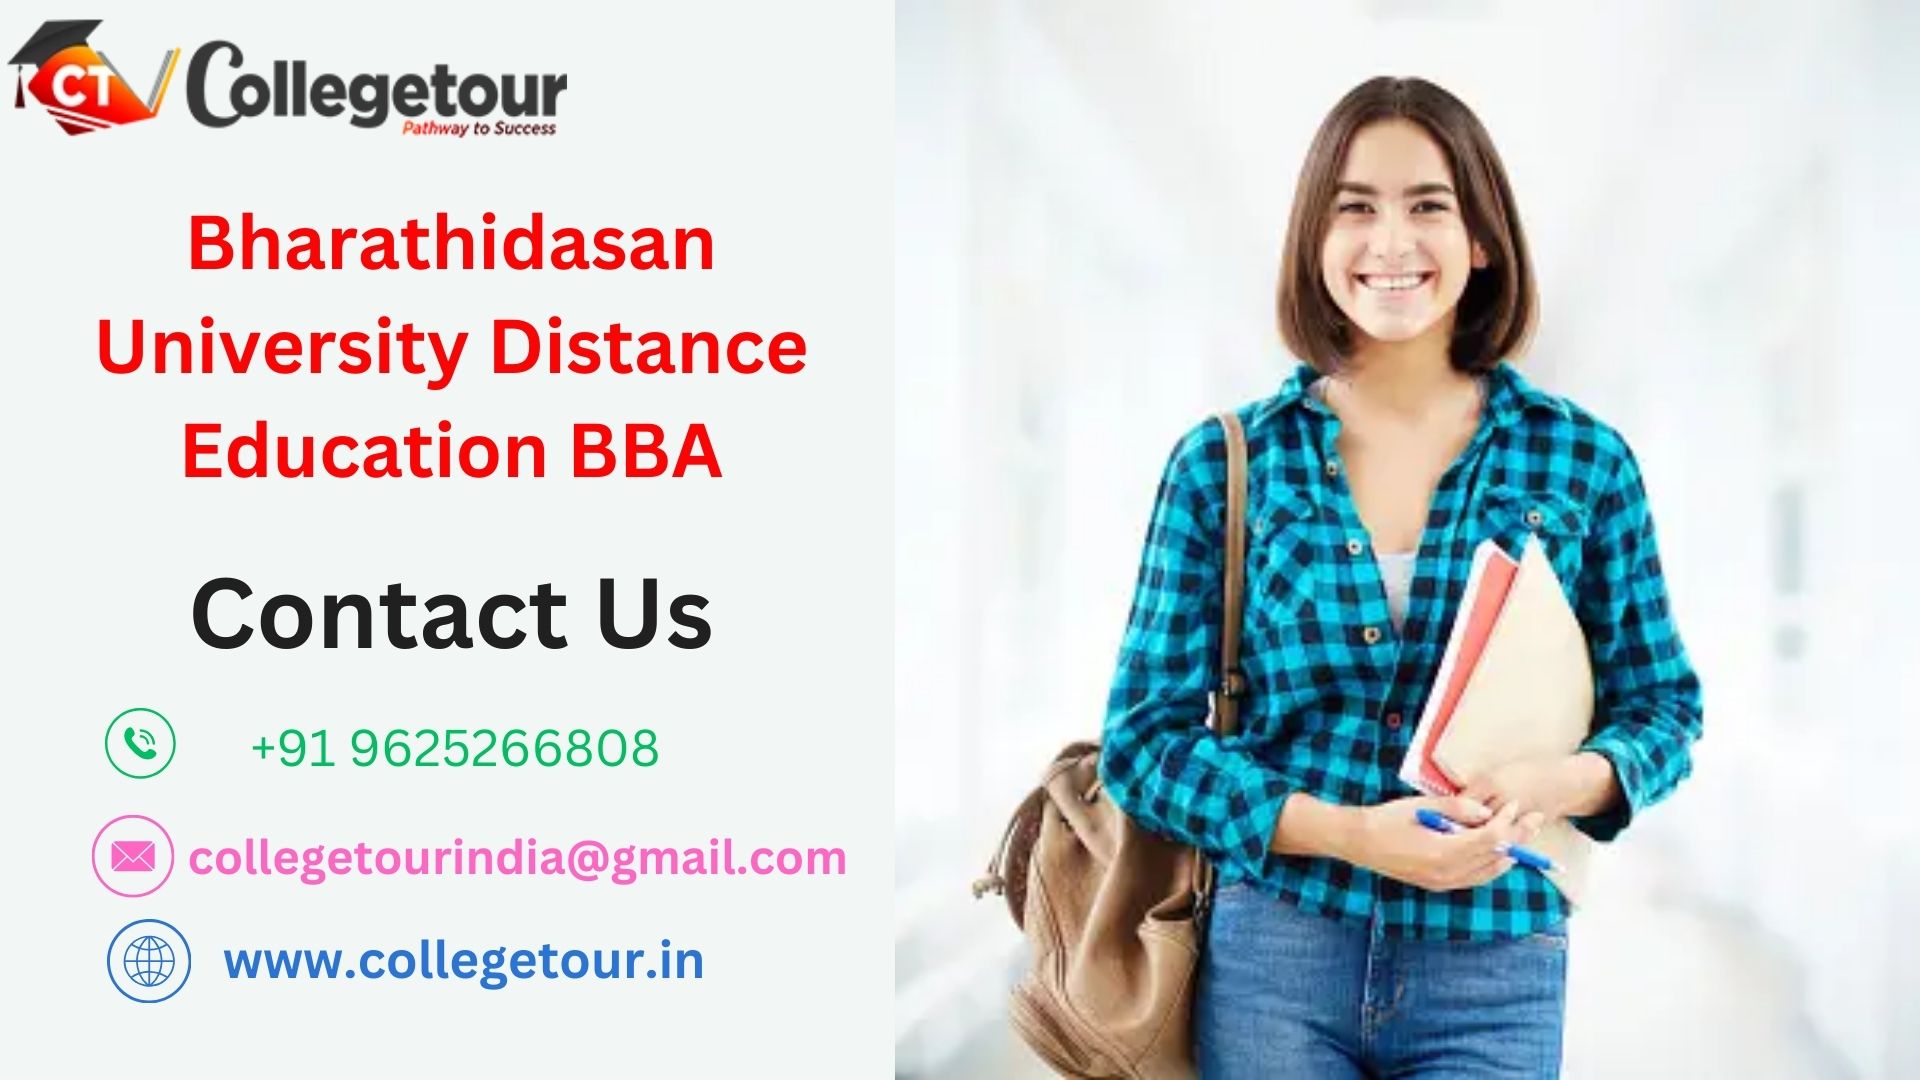 Bharathidasan University Distance Education BBA